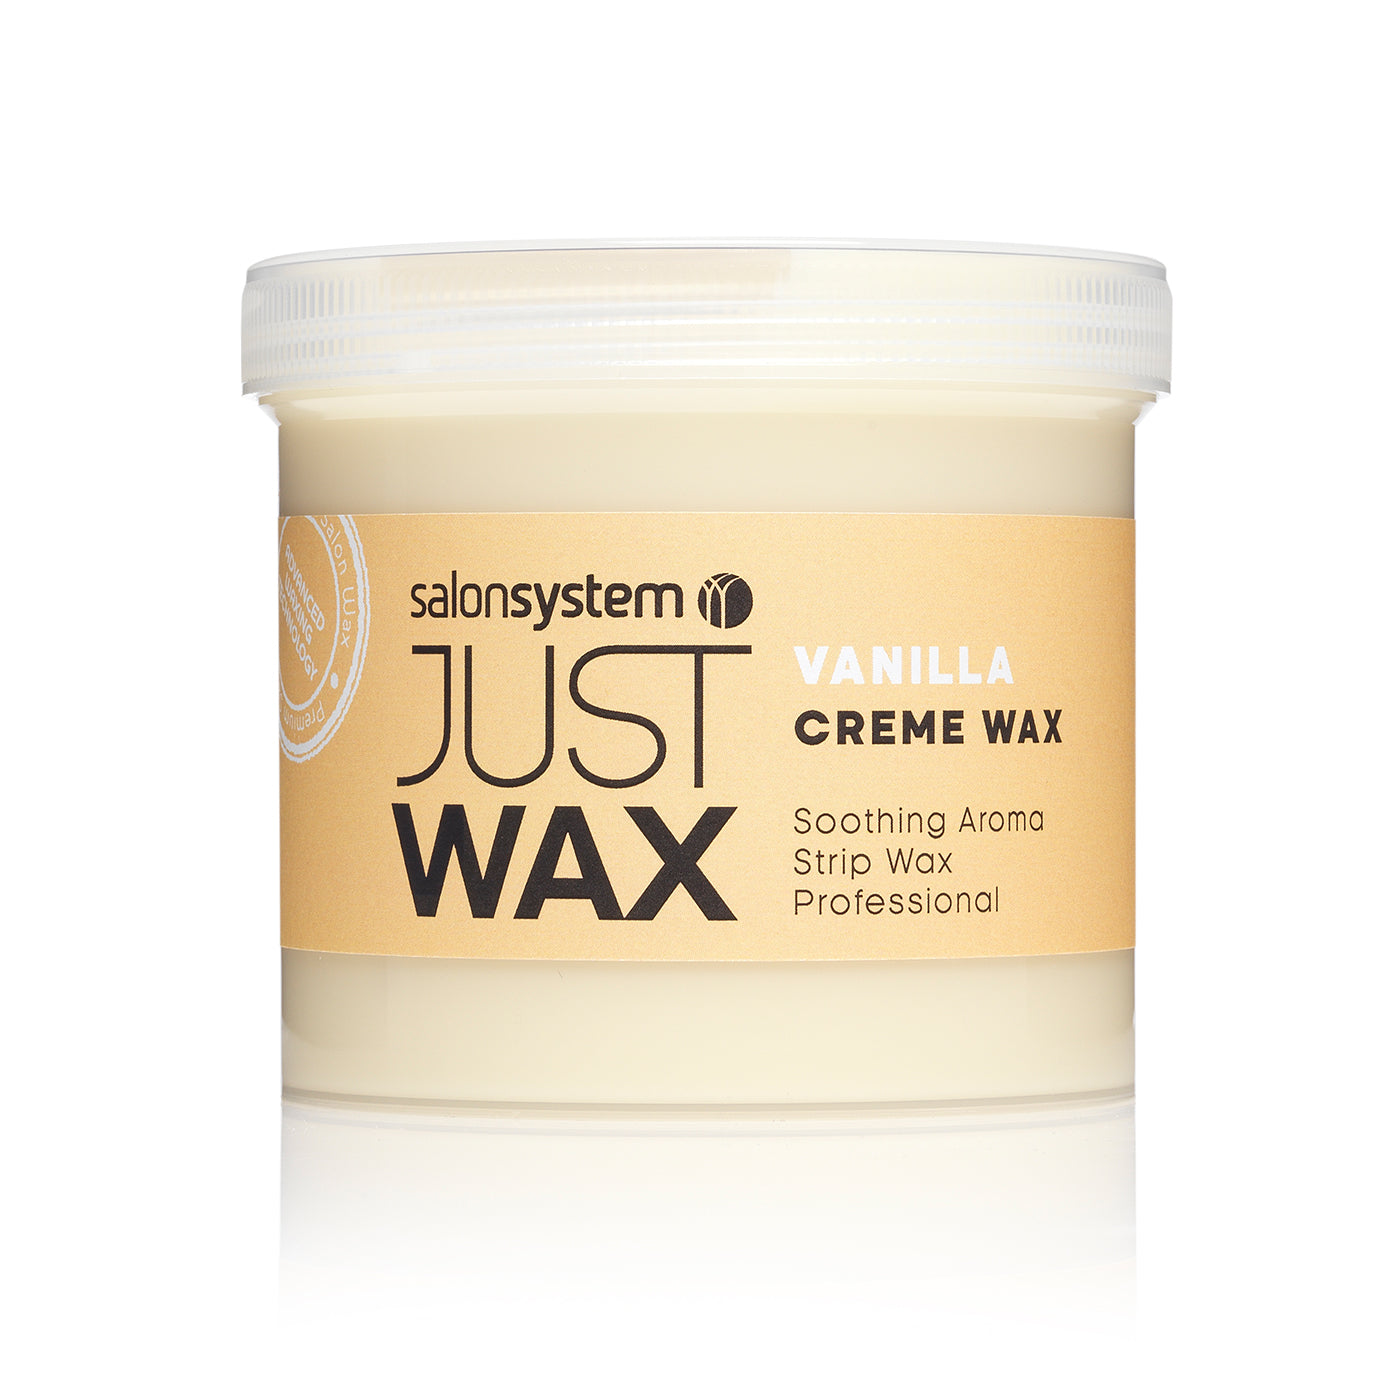 Just Wax Vanilla Creme Wax (450g) - Ultimate Hair and Beauty